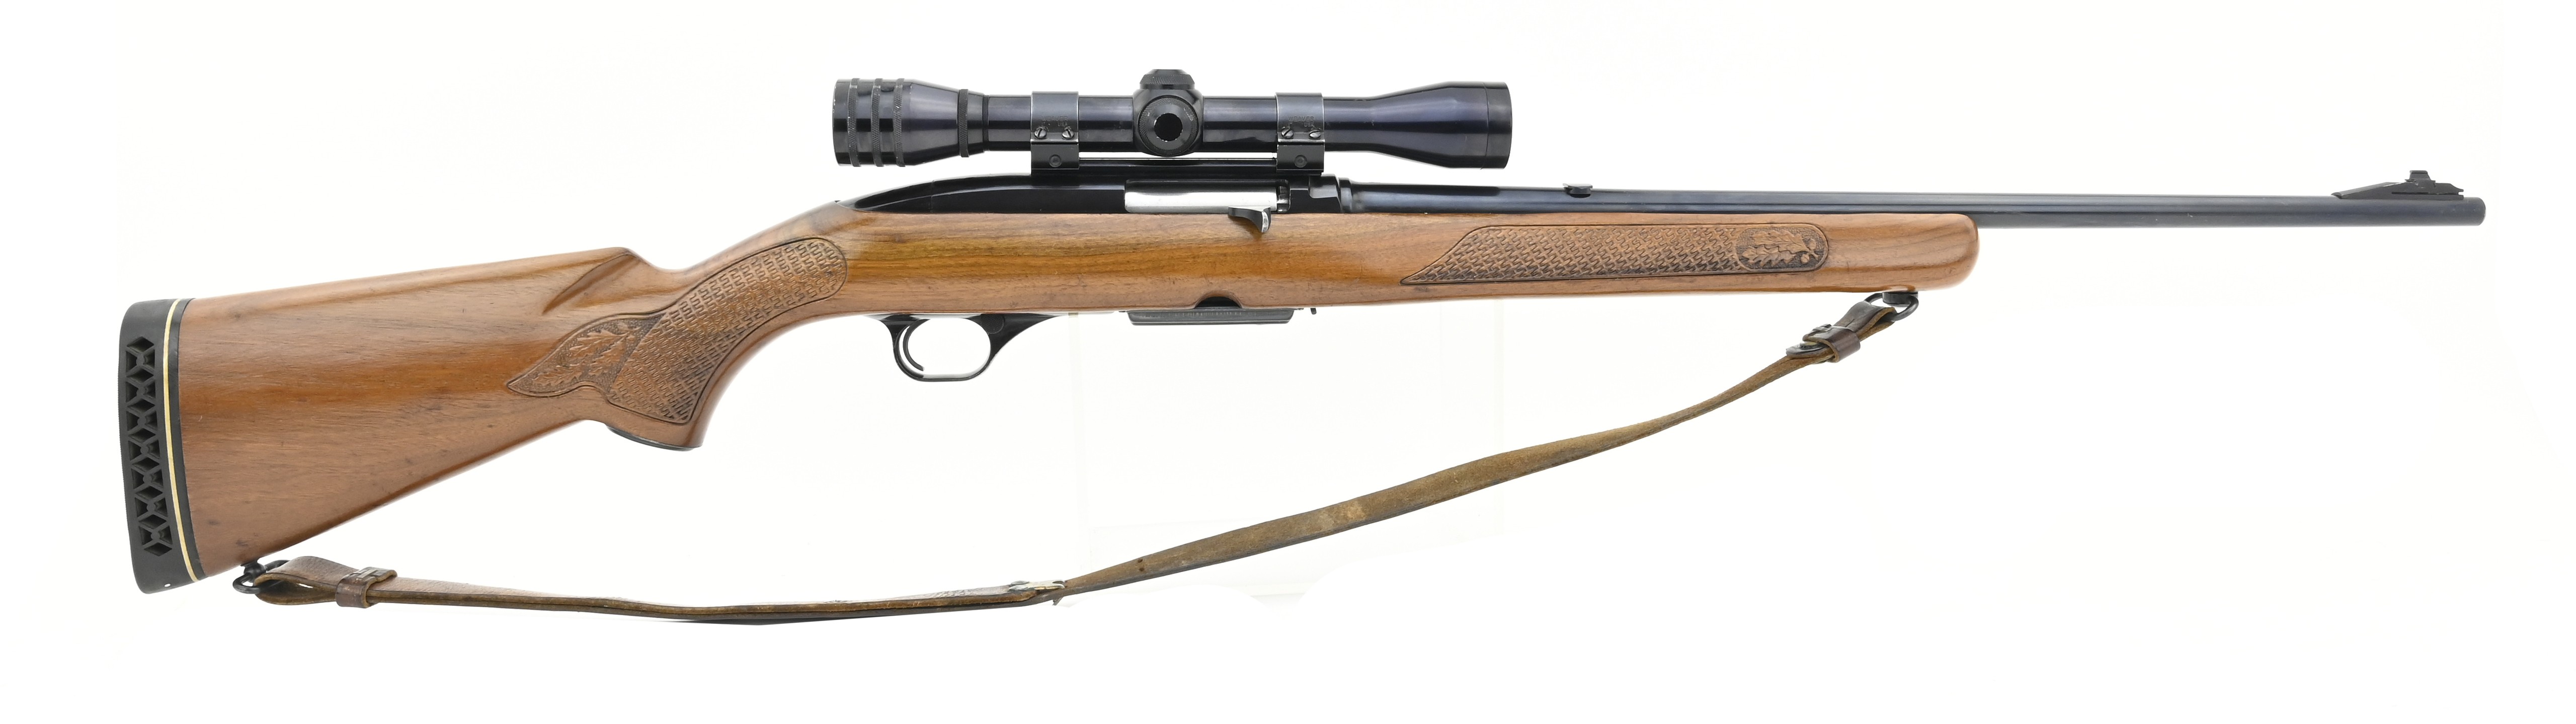 winchester-100-243-win-caliber-rifle-for-sale